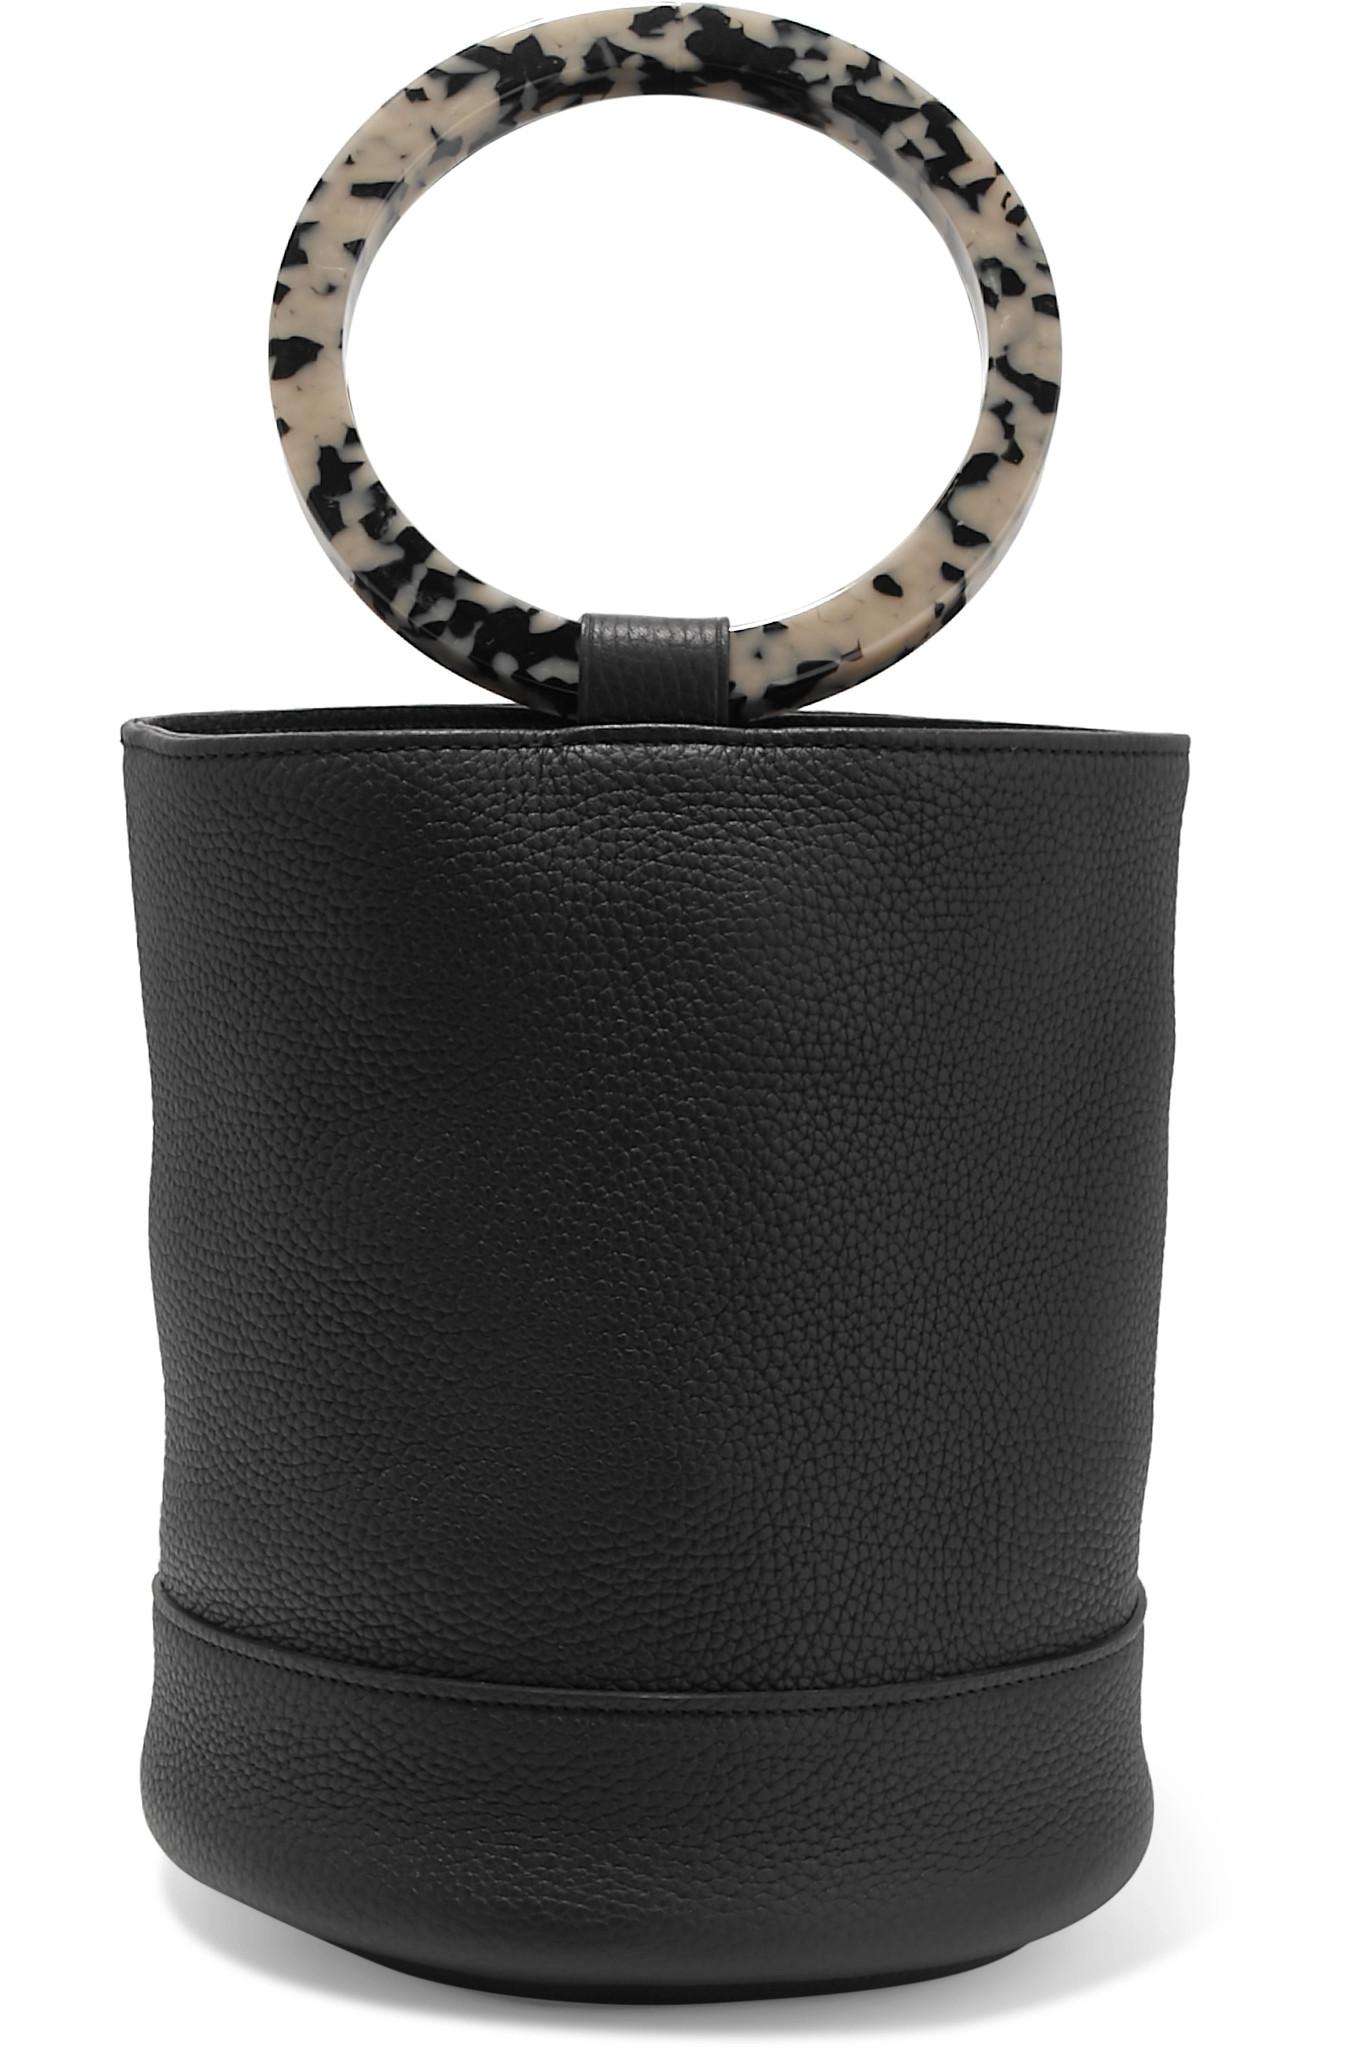 Lyst - Simon Miller Bonsai 20 Textured-leather Bucket Bag in Black